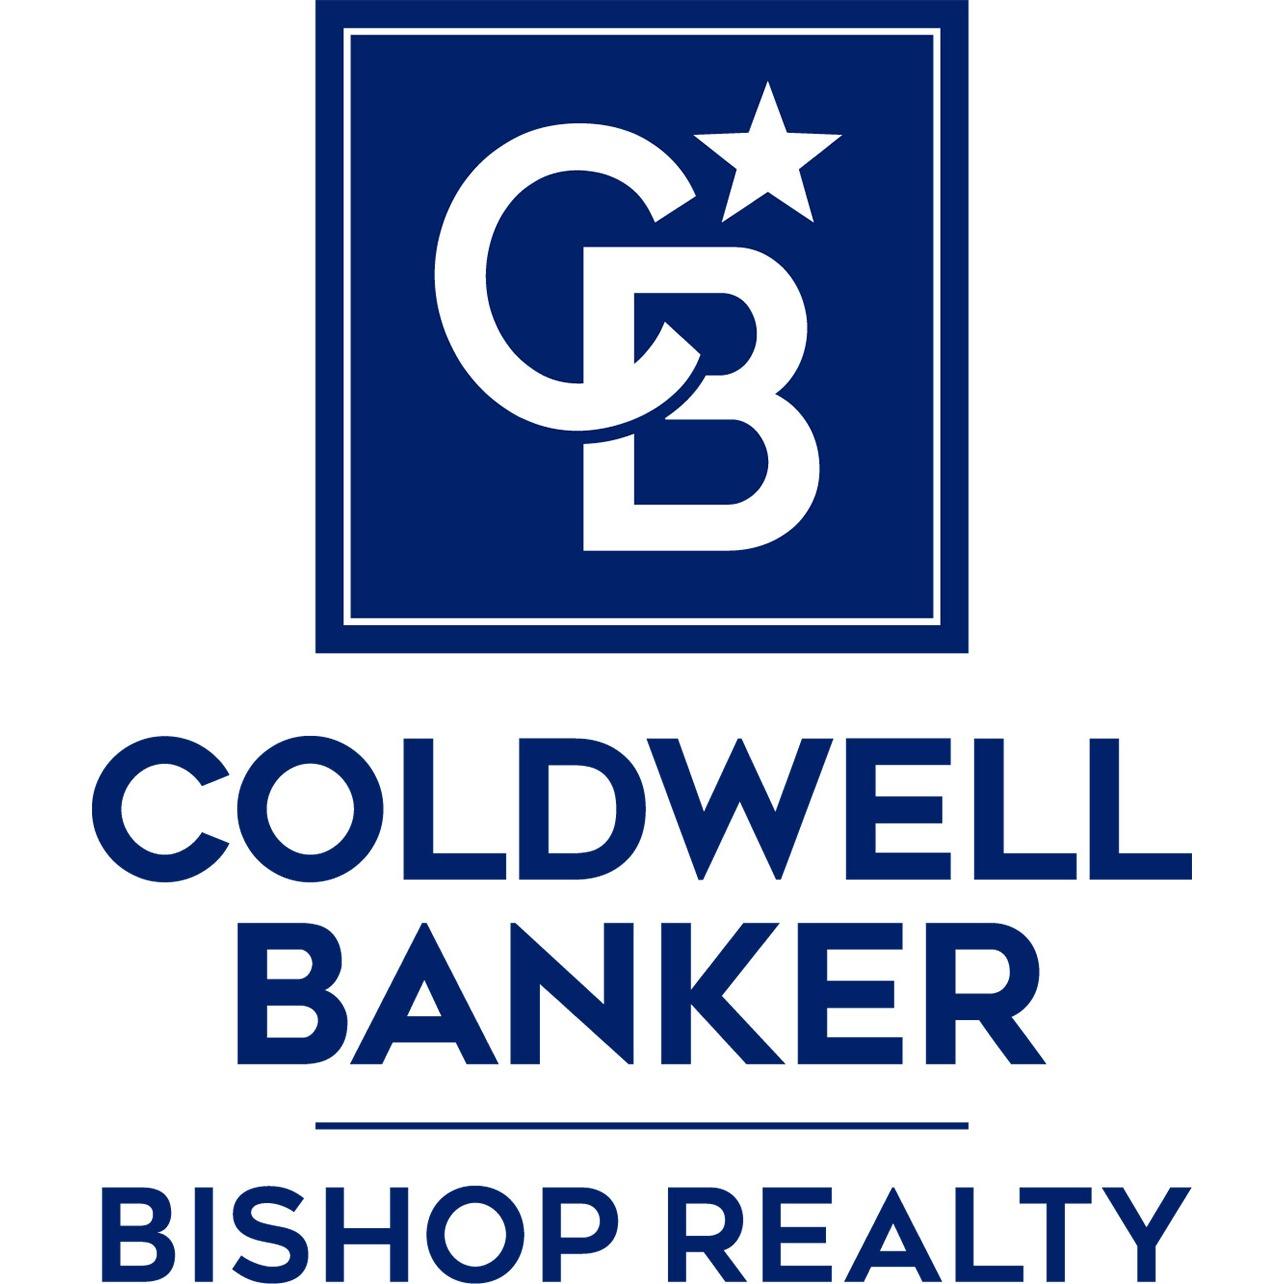 Coldwell Banker Bishop Realty